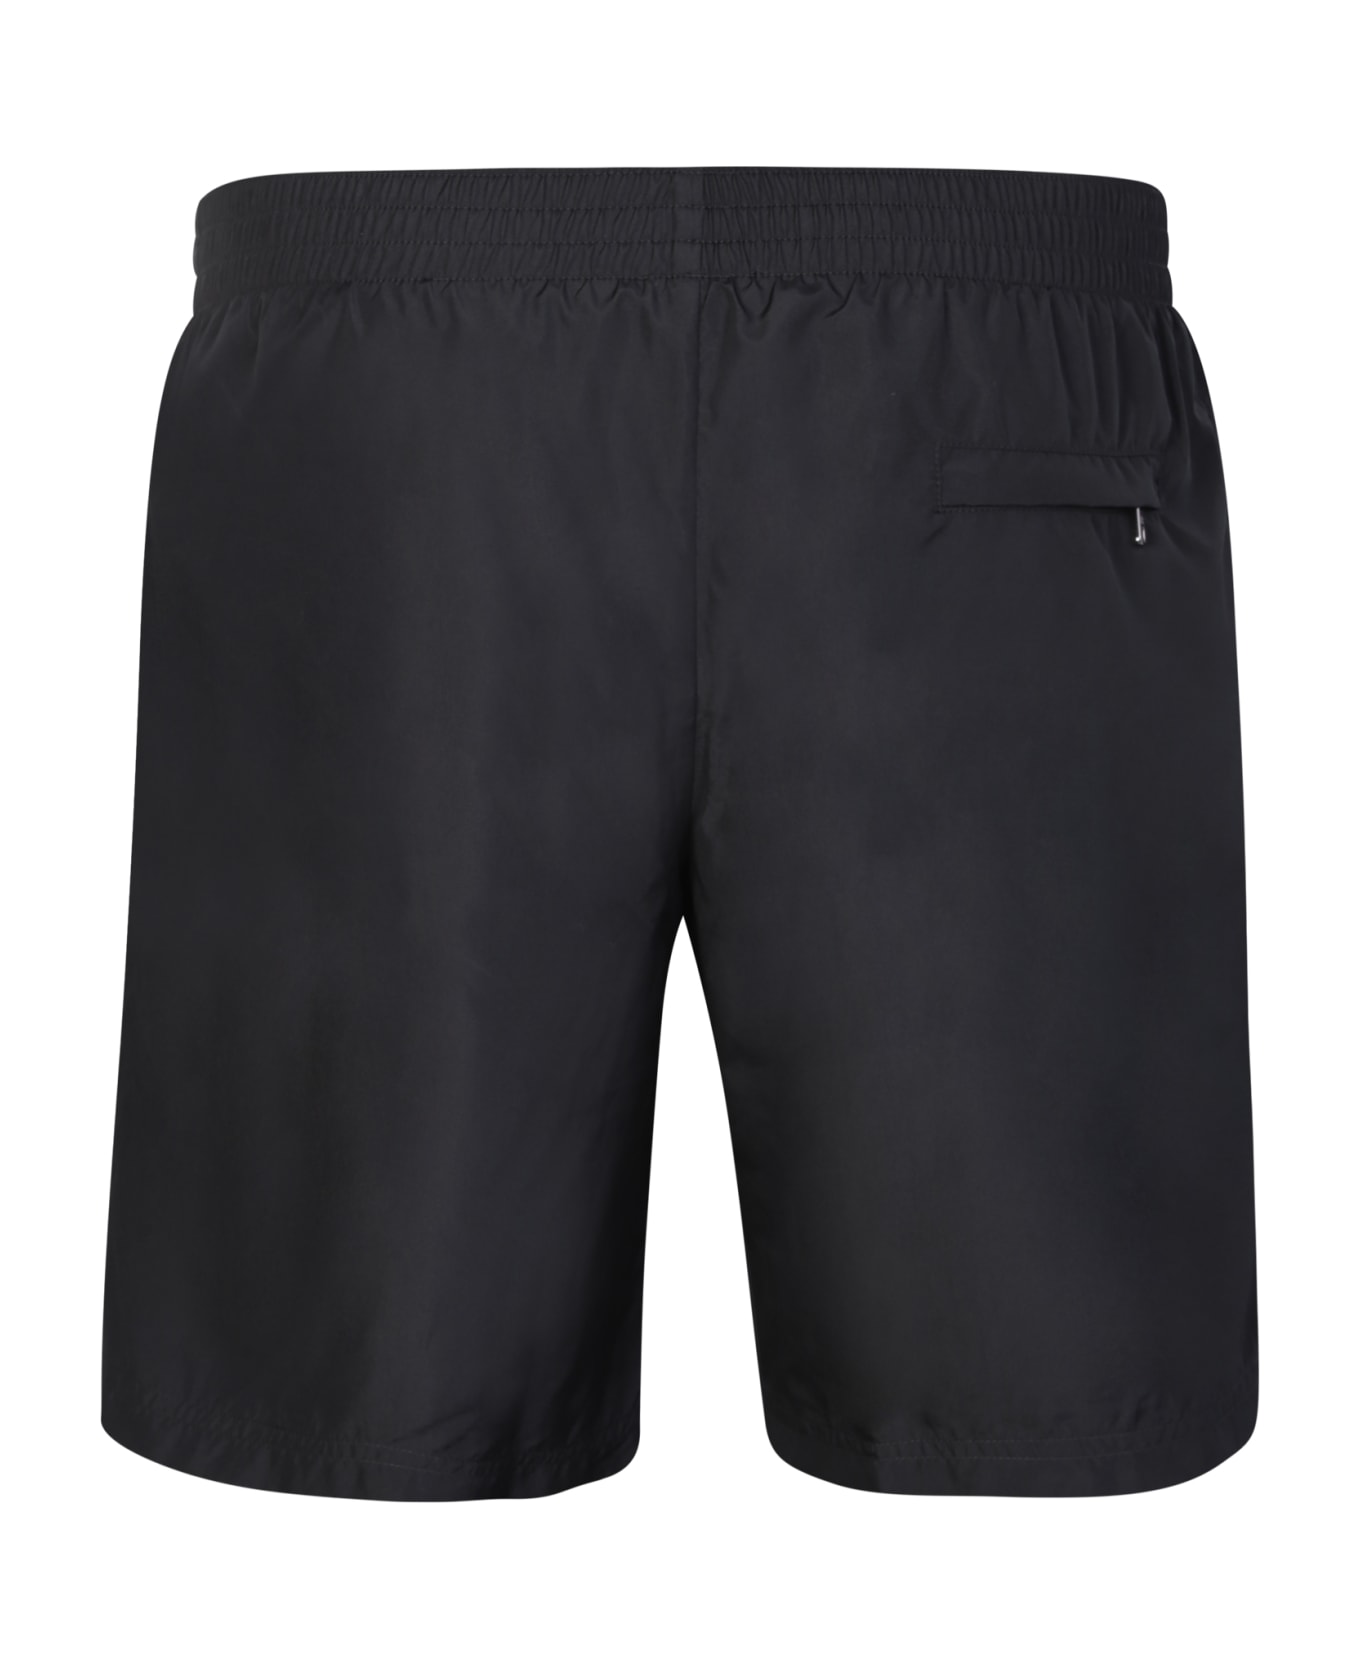 Dolce & Gabbana Black Swim Shorts - Black